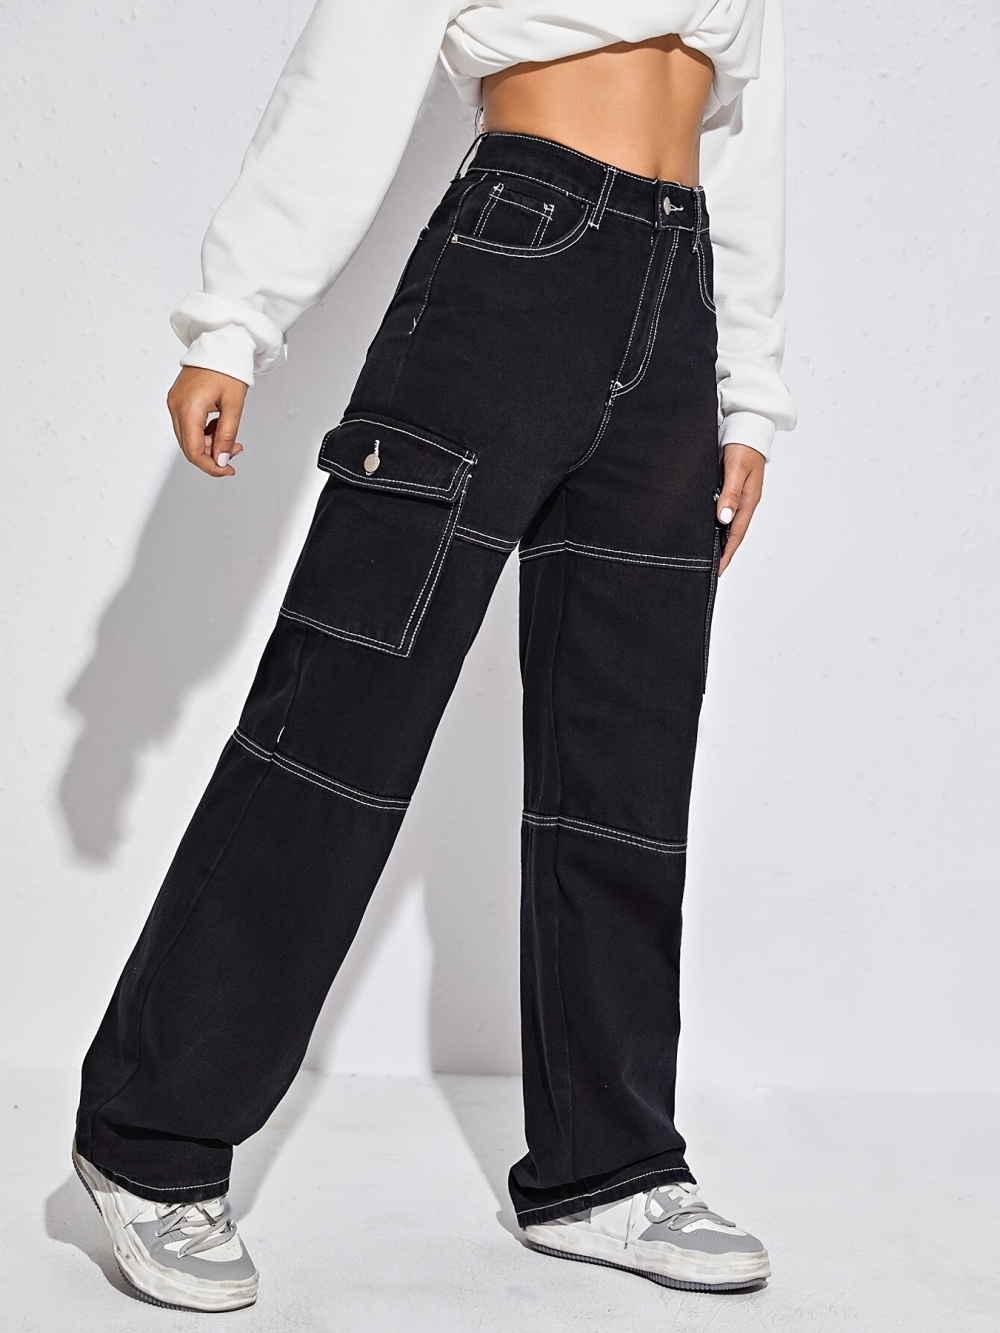 Straight black pants pocket jeans for women